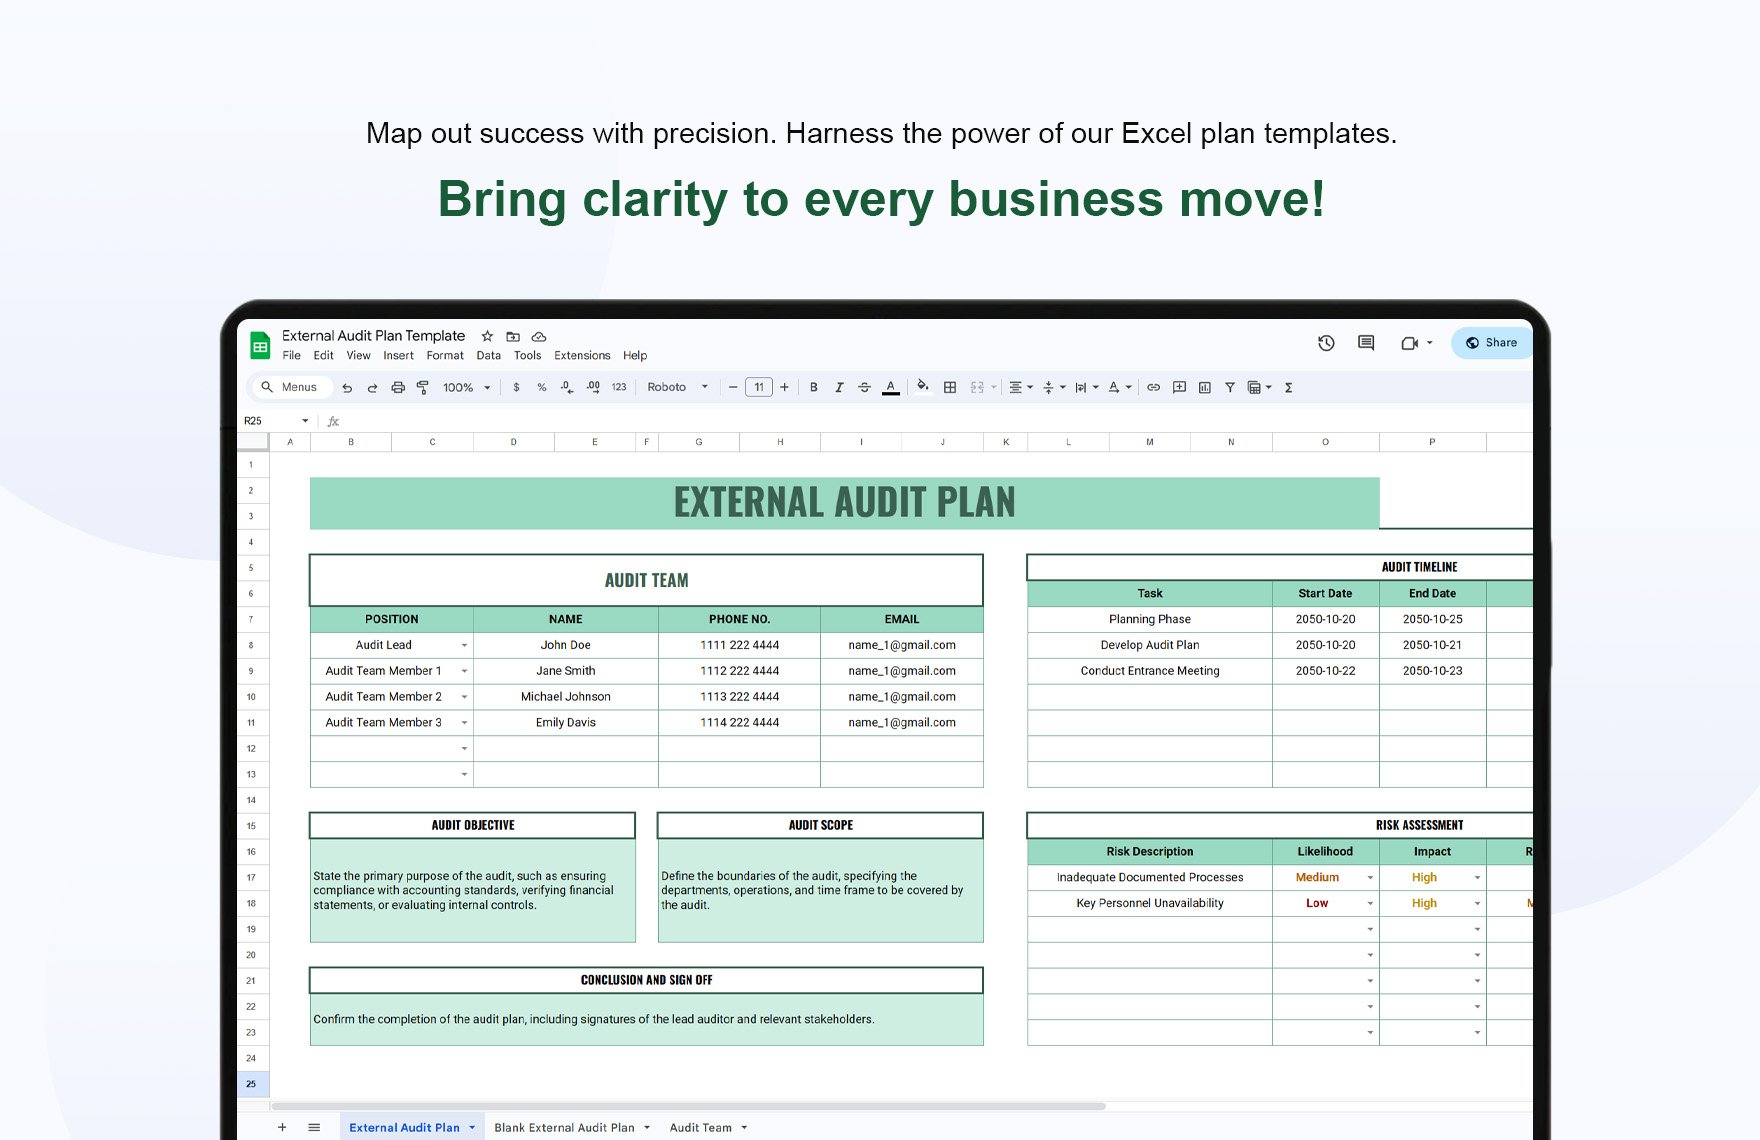 External Audit Plan Template - Download in Excel, Google Sheets ...